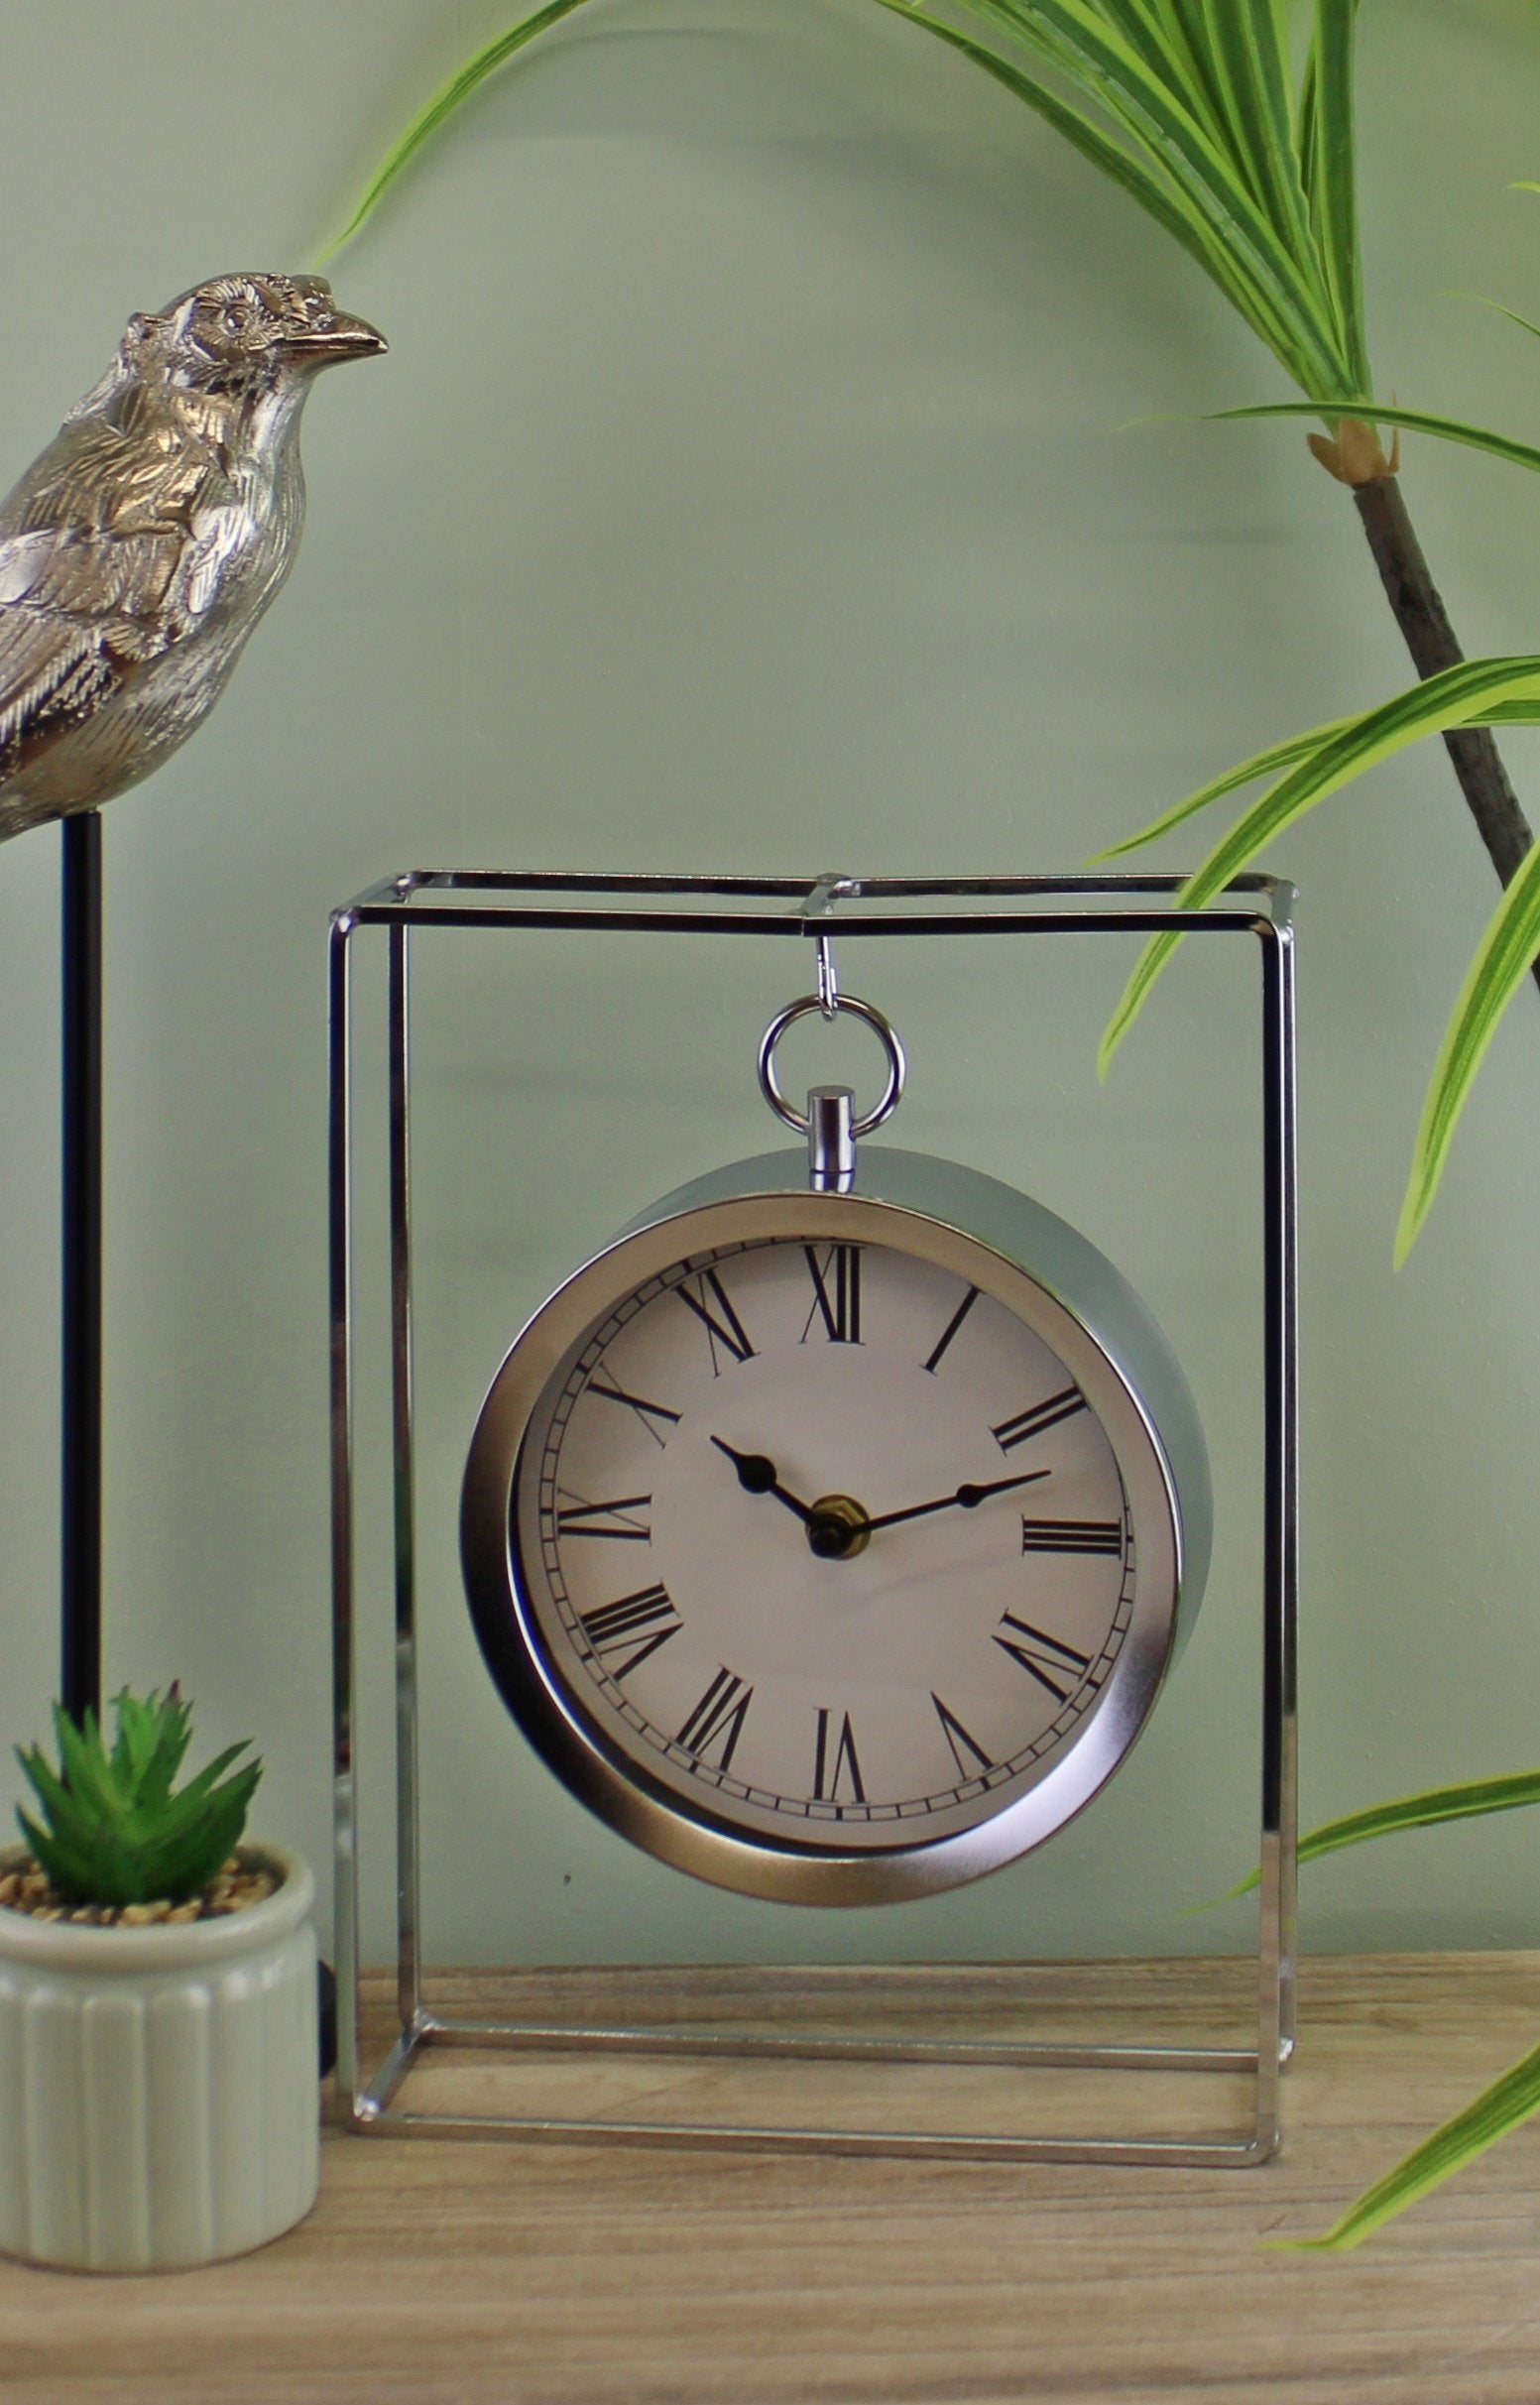 Silver Metal Freestanding Hanging Clock In Frame, 25cm